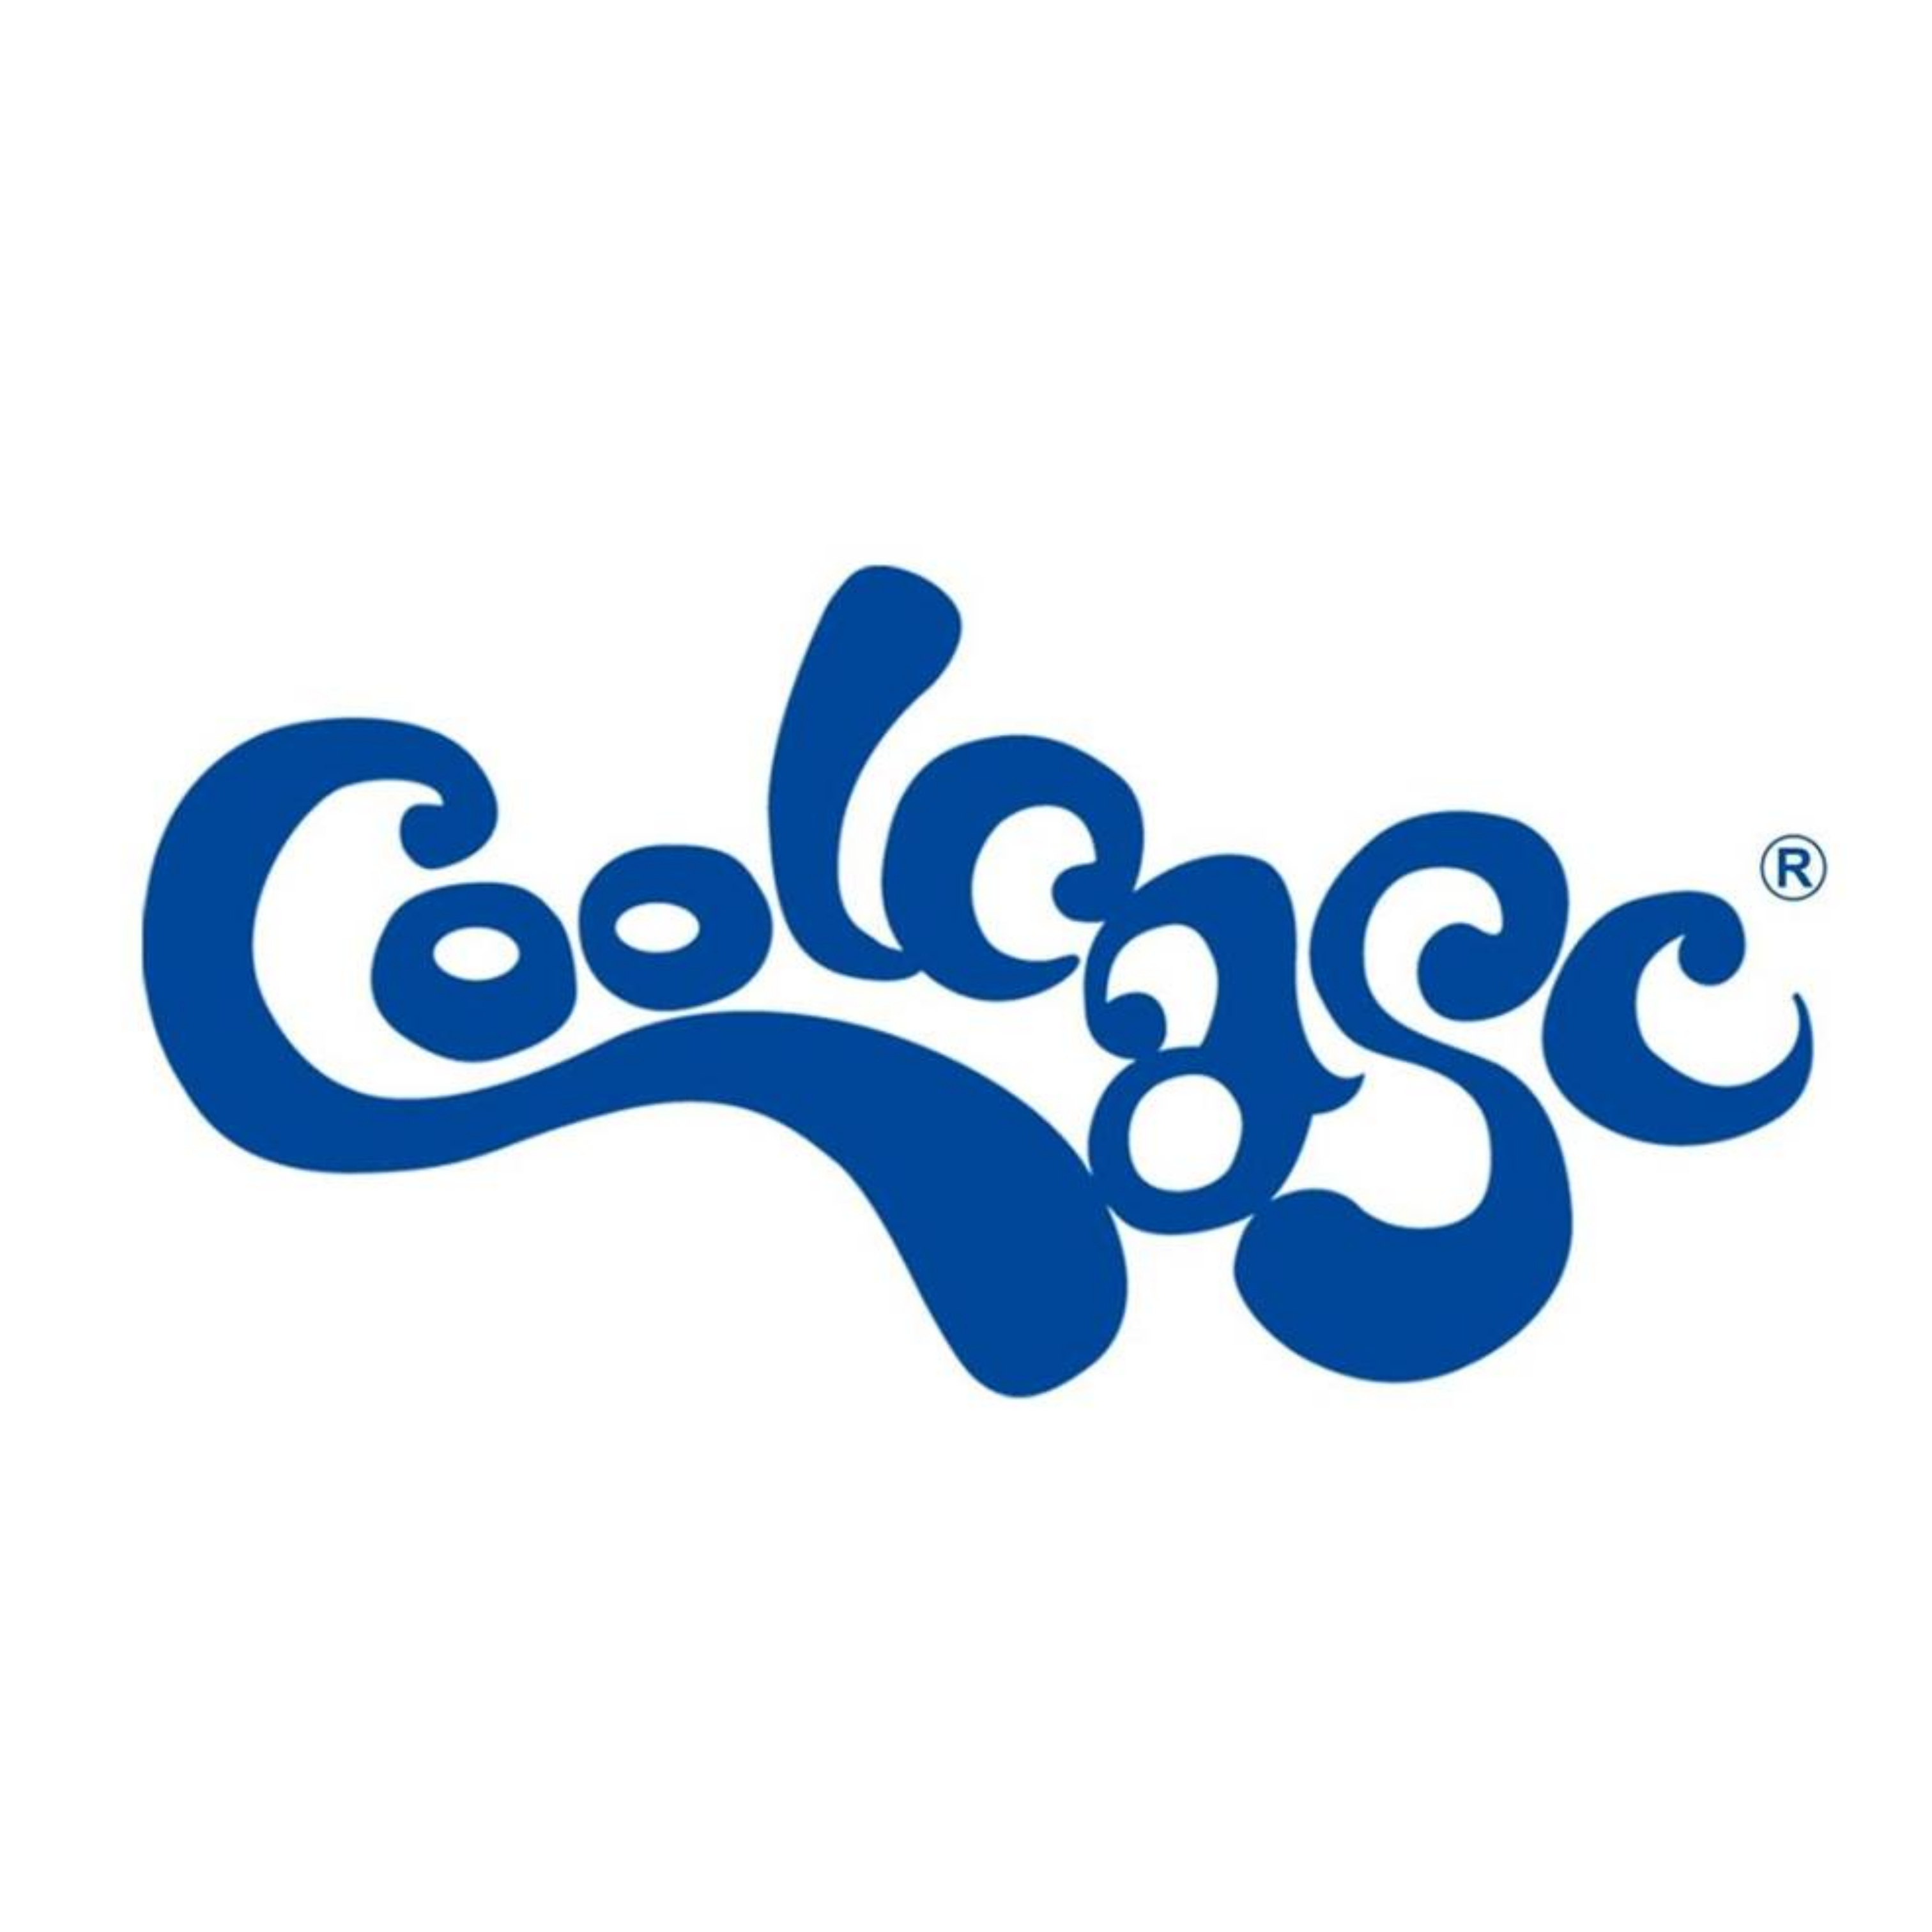 Coolcasc